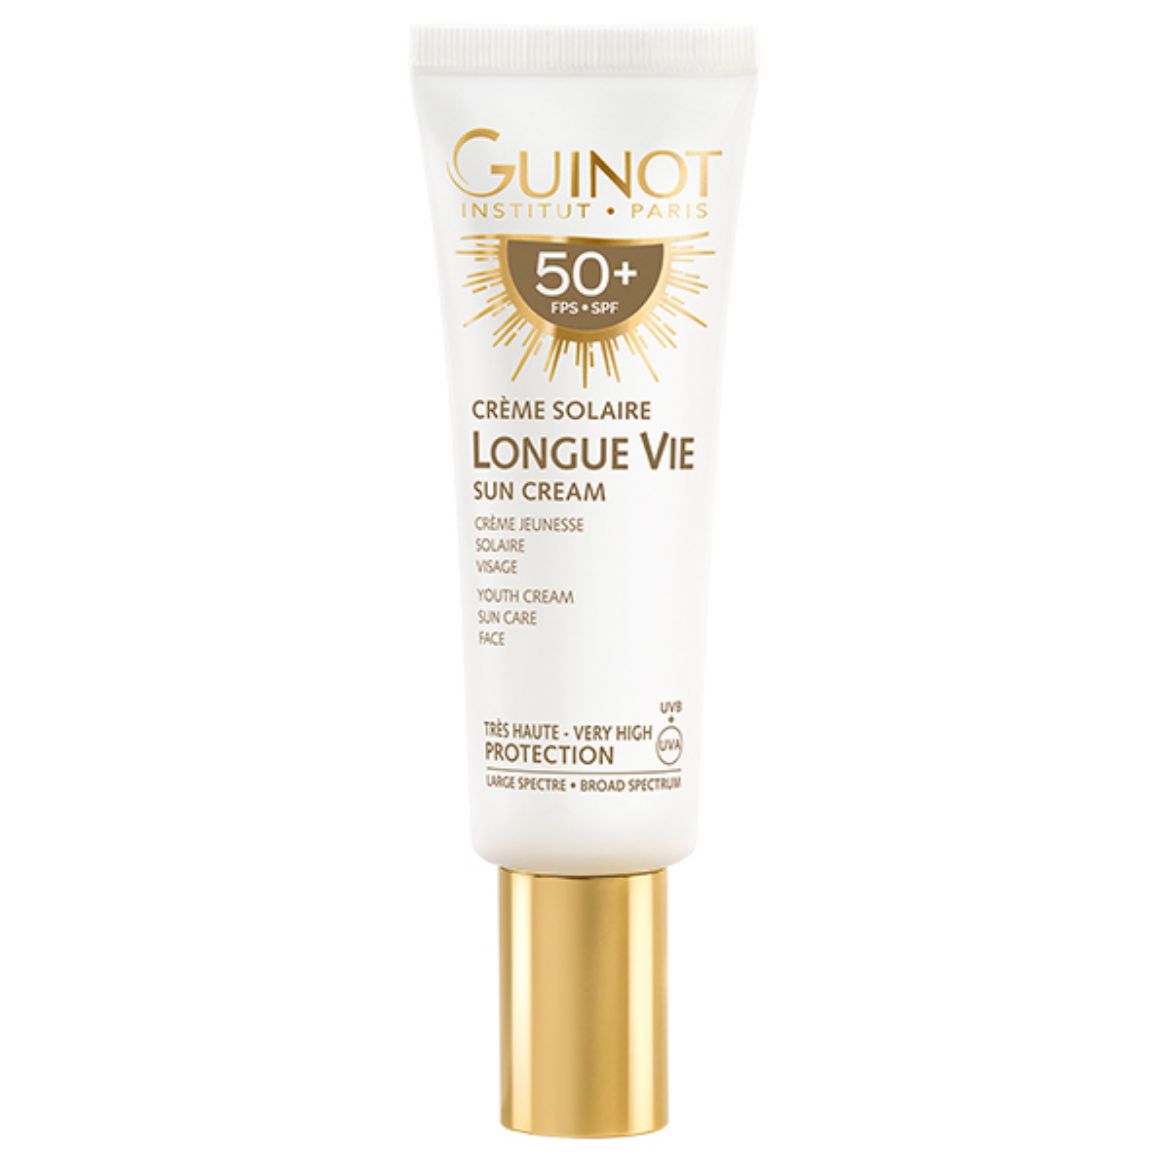 Image of Guinot Longue Vie Crème Solaire SPF50+ (50ml)